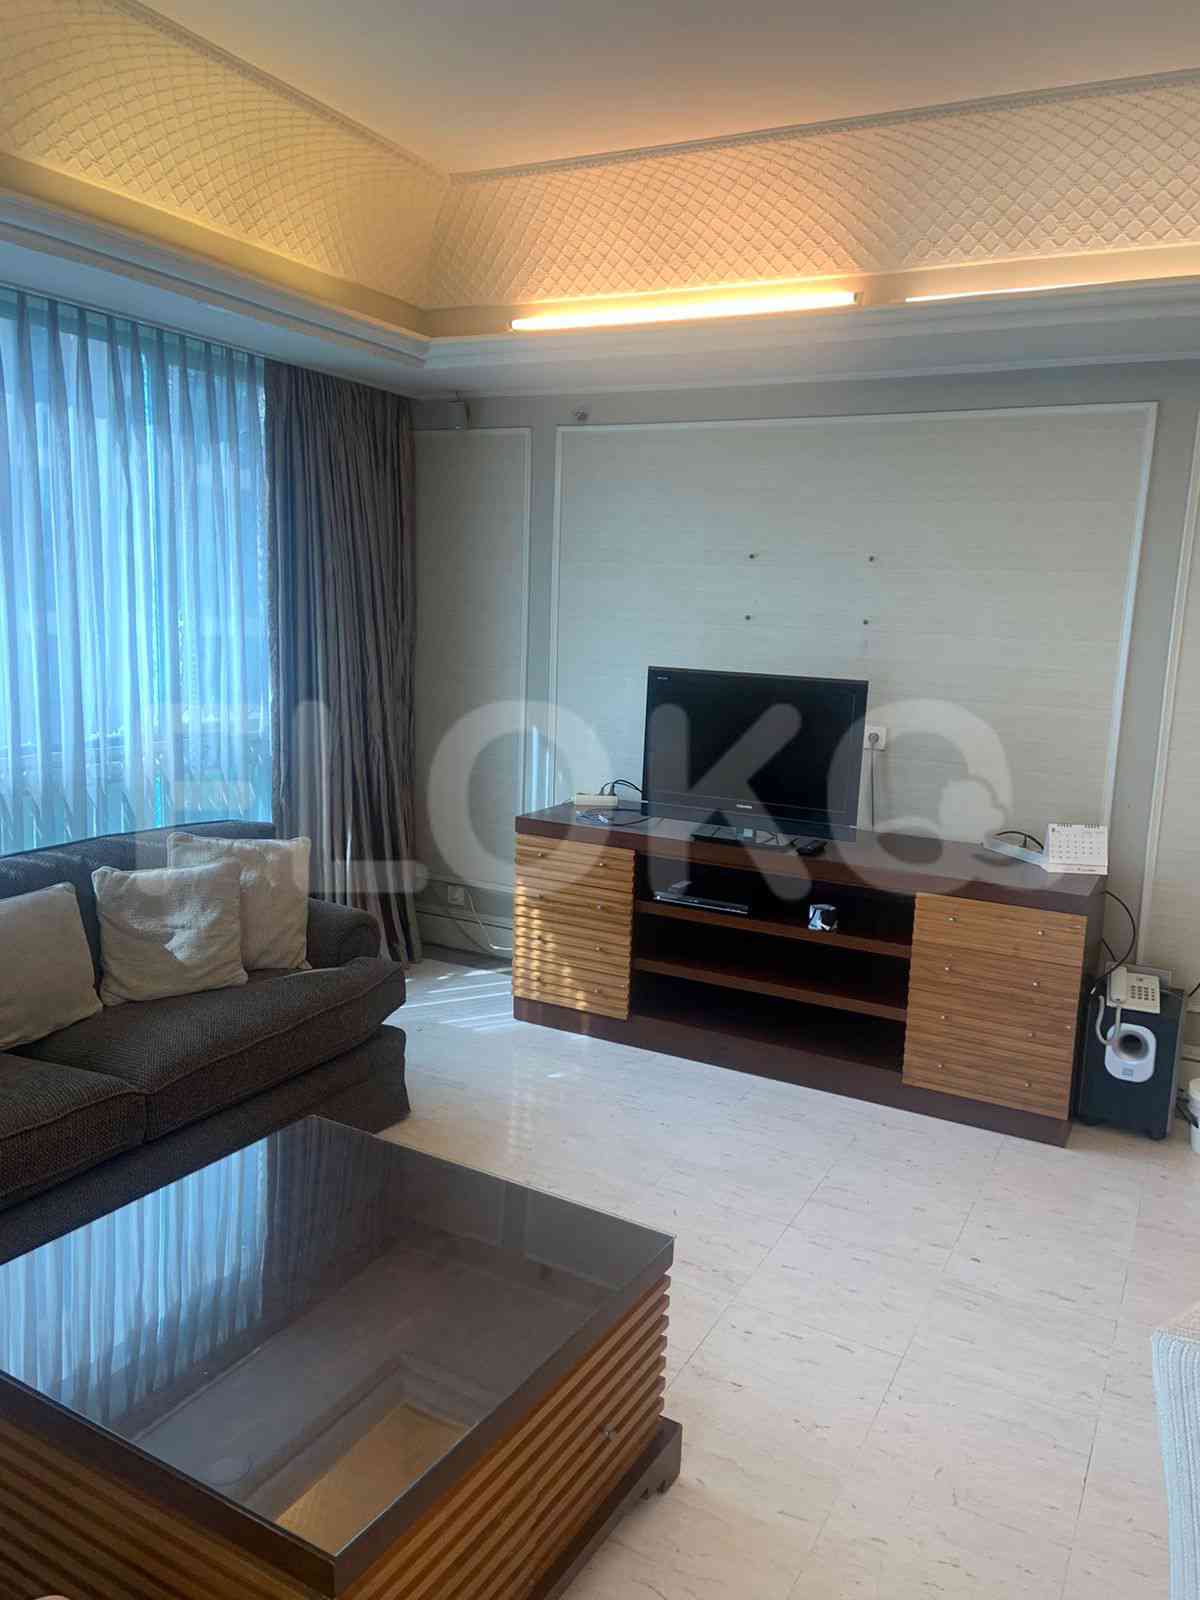 2 Bedroom on 5th Floor for Rent in Casablanca Apartment - fte5d5 1